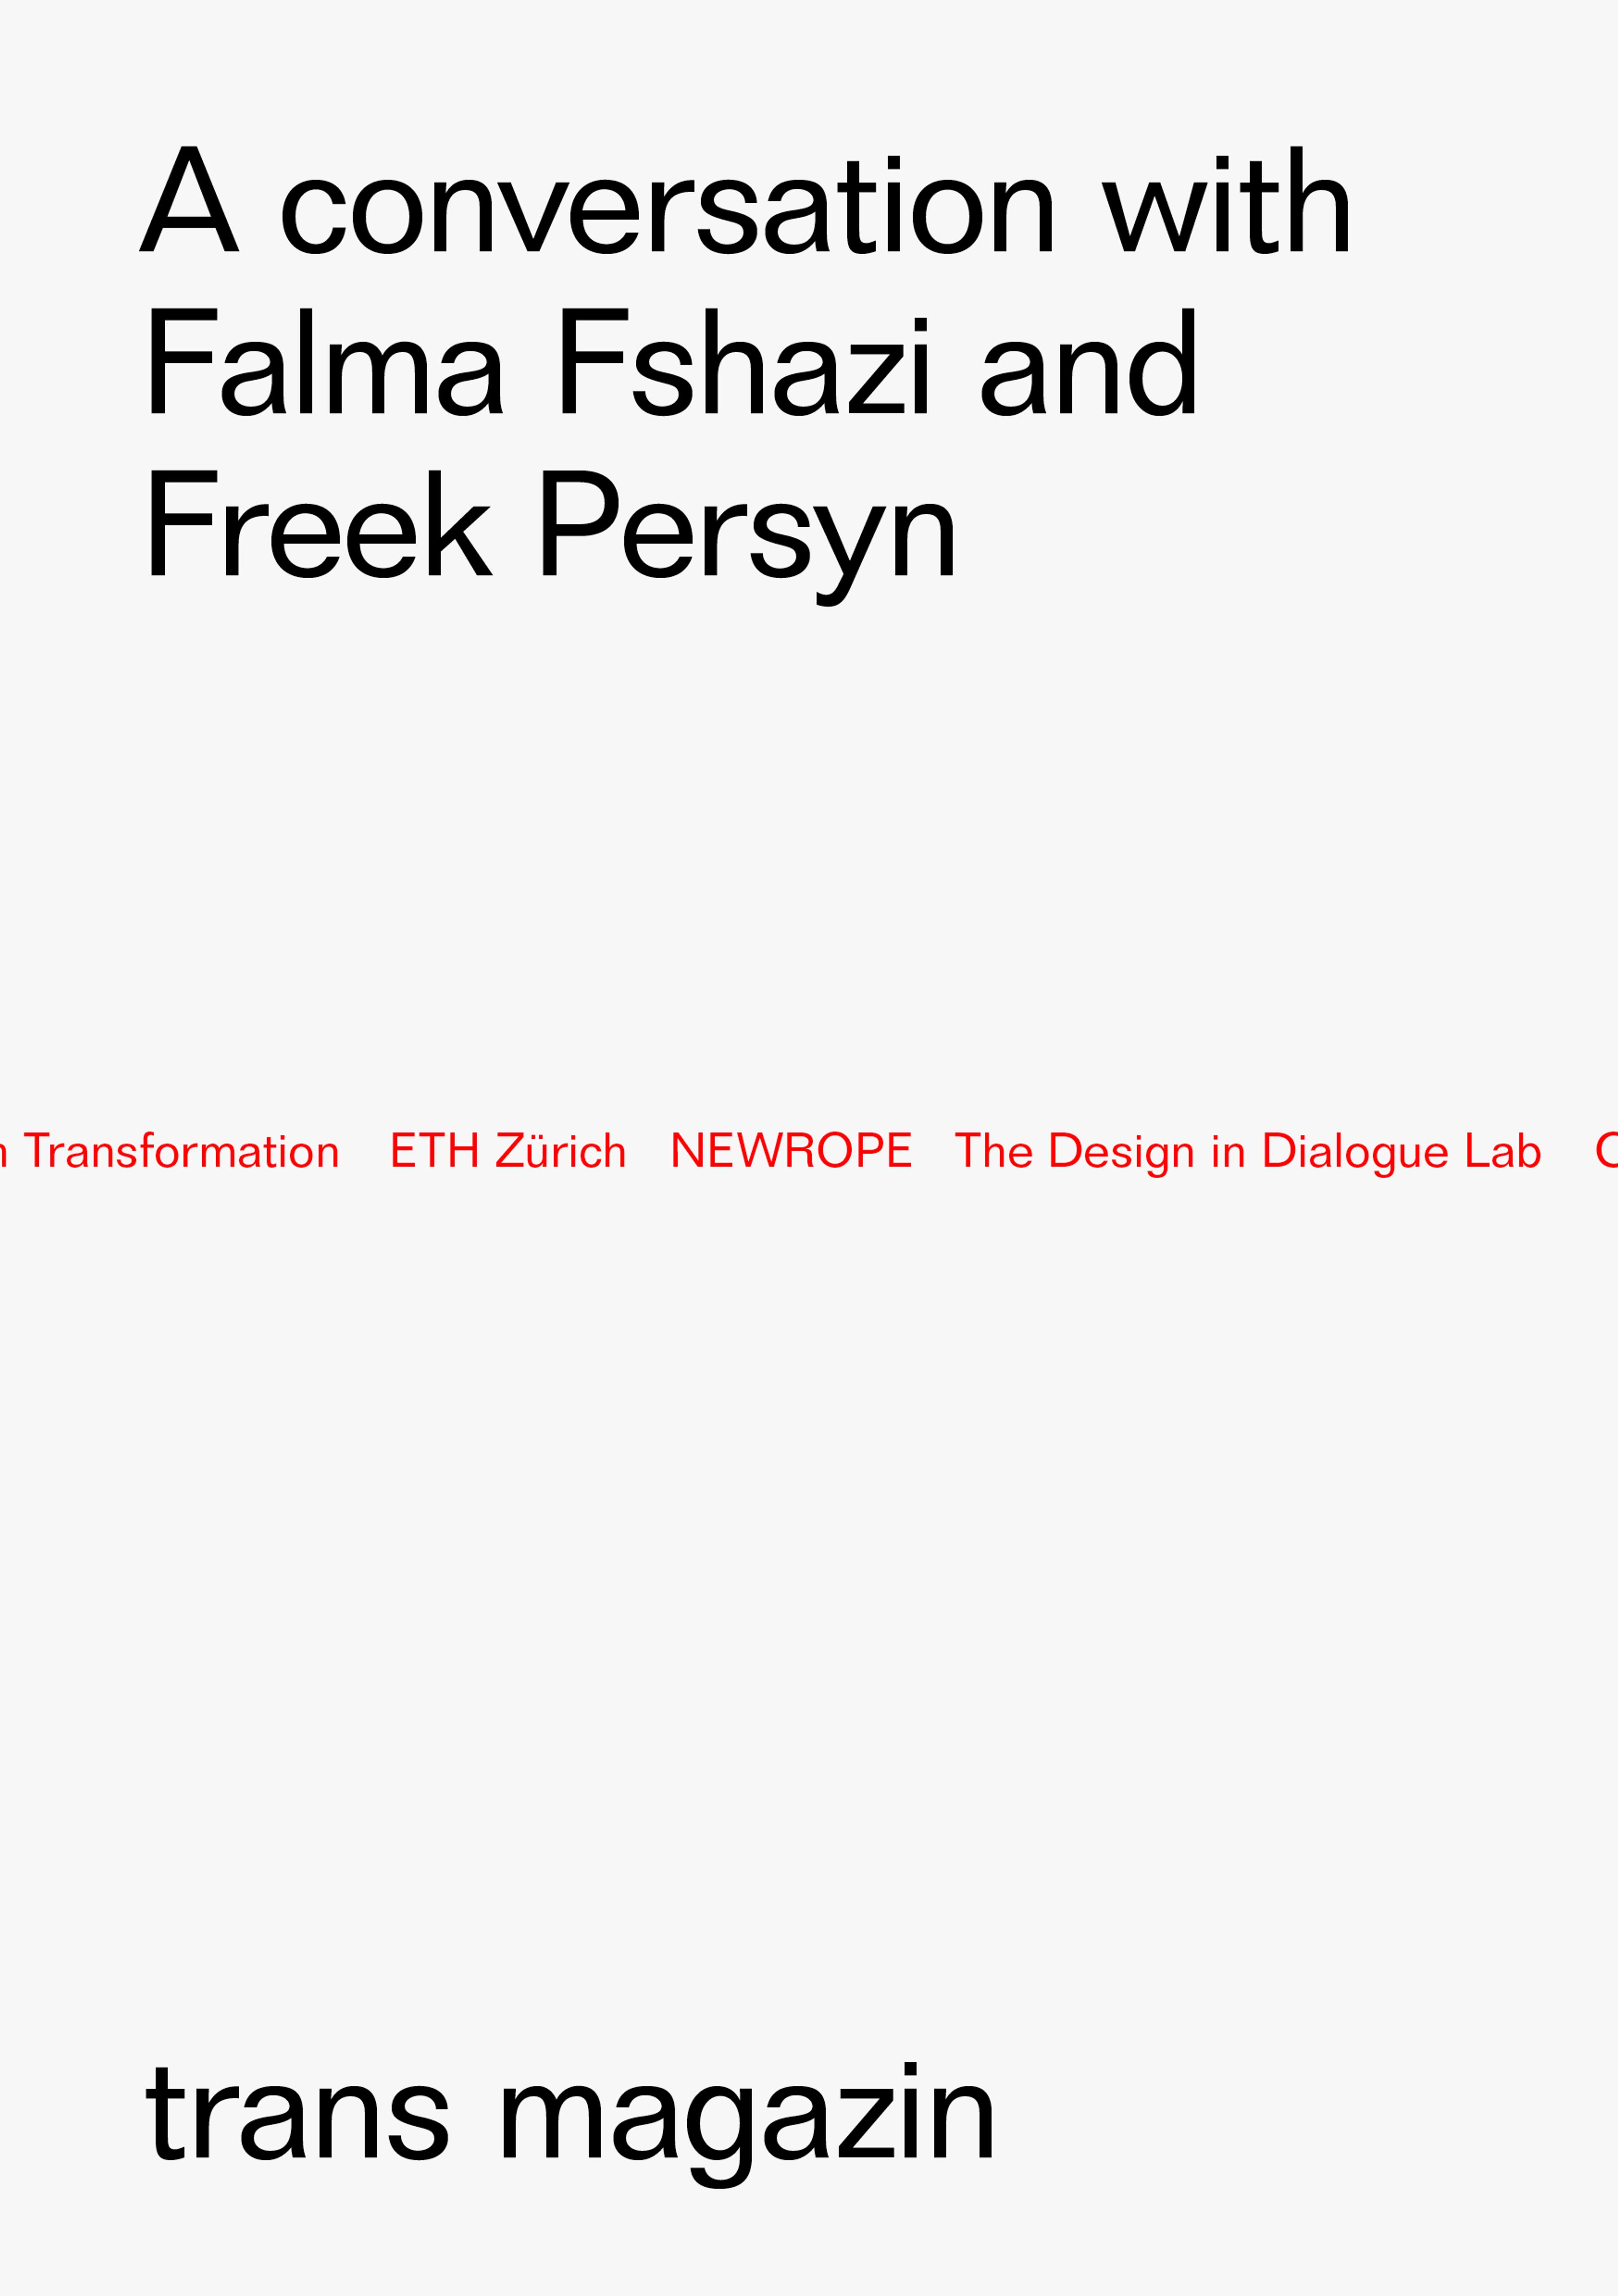 Publication: A Conversation with Falma Fshazi and Freek Persyn - trans magazin